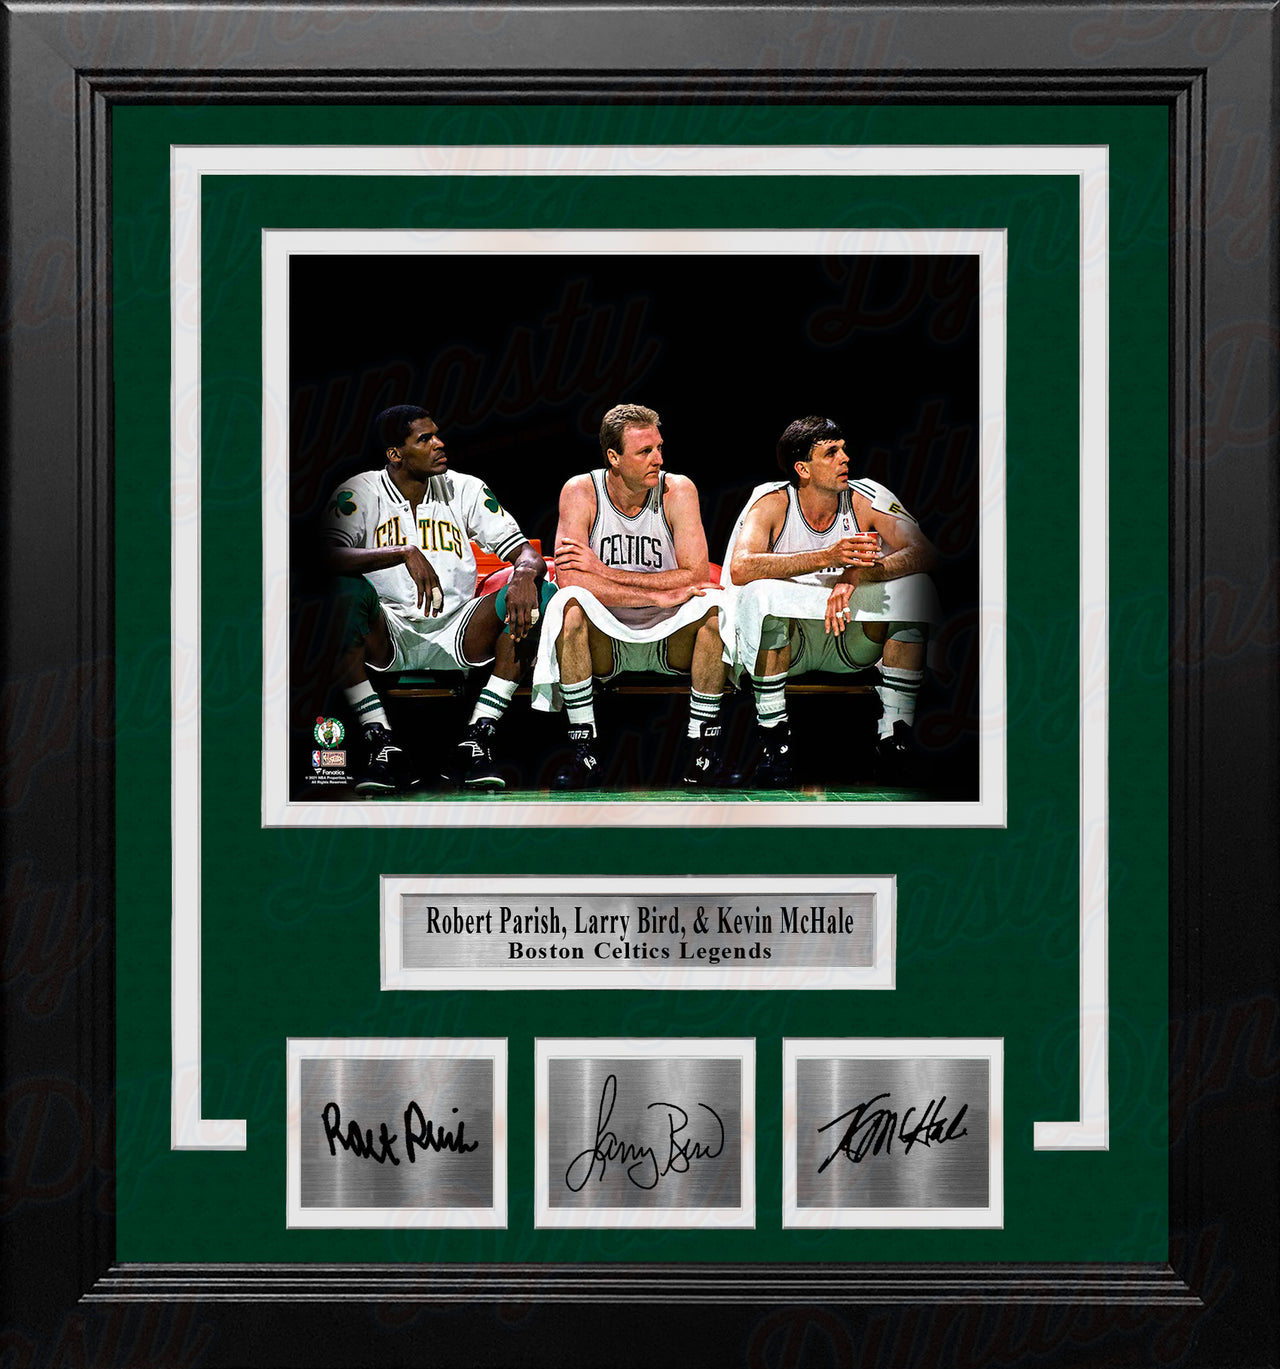 Robert Parish, Larry Bird, & Kevin McHale Boston Celtics 8x10 Framed Photo with Engraved Autographs - Dynasty Sports & Framing 